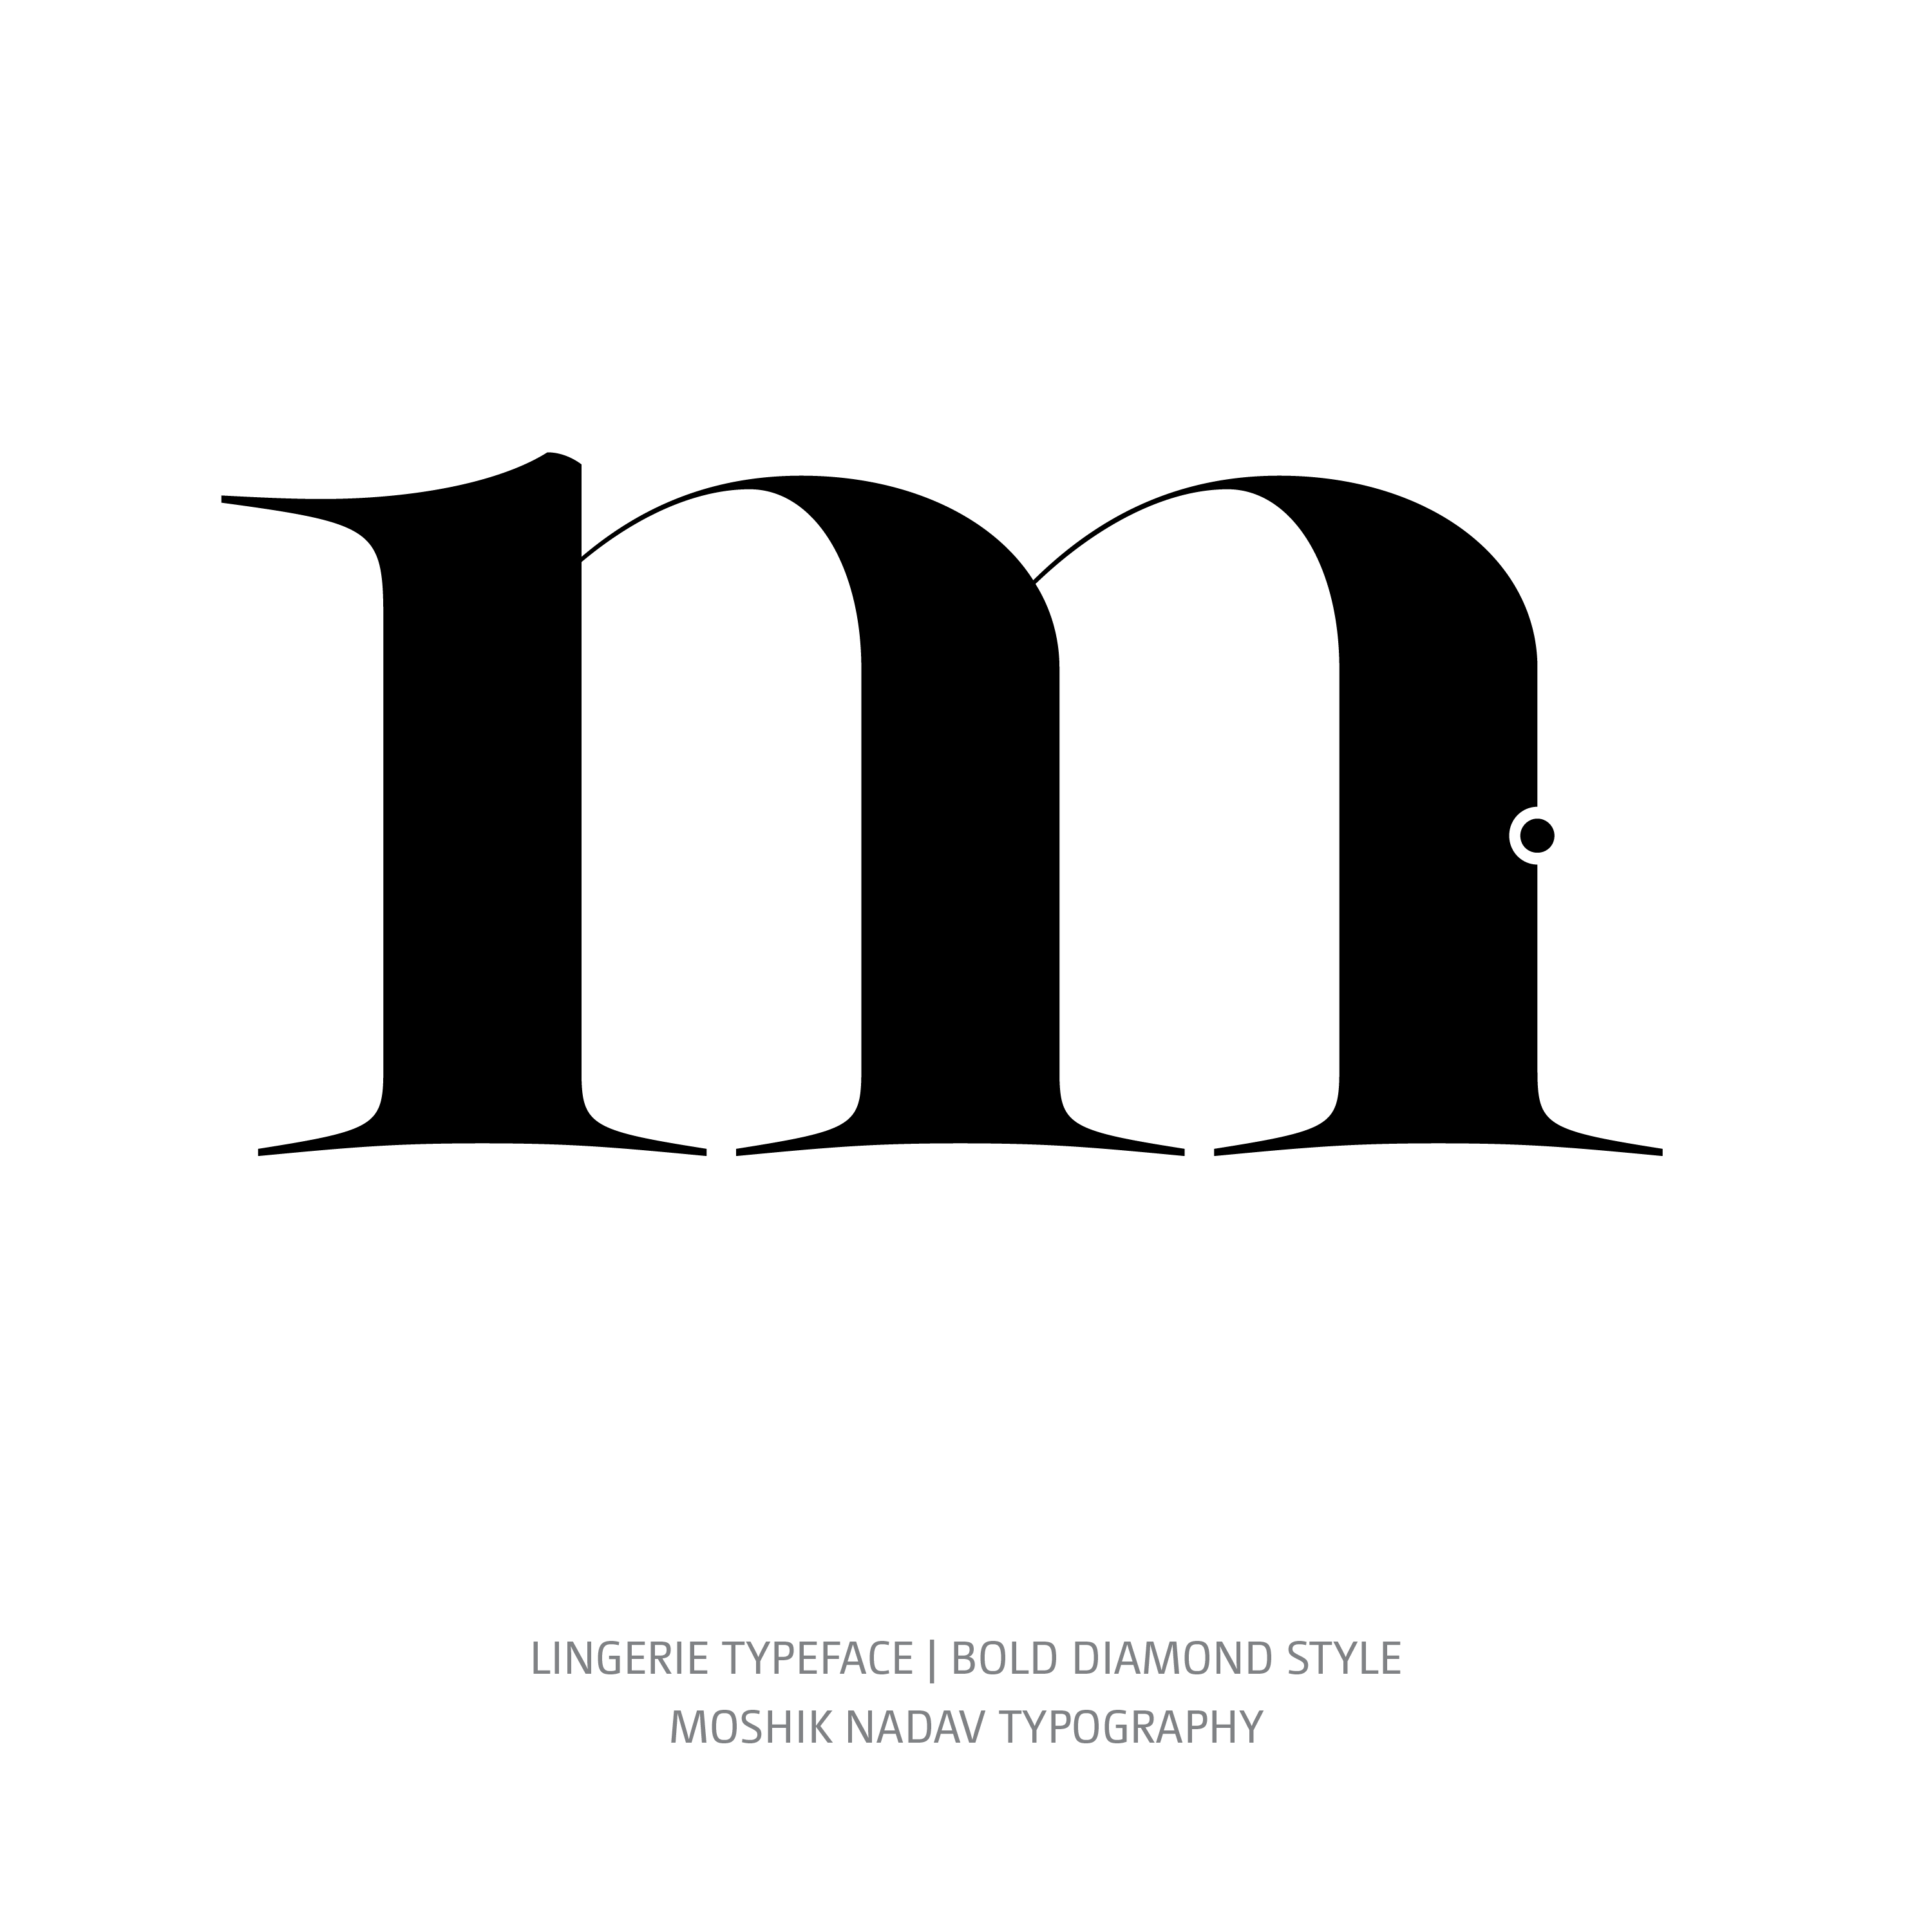 Lingerie Typeface Bold Diamond m